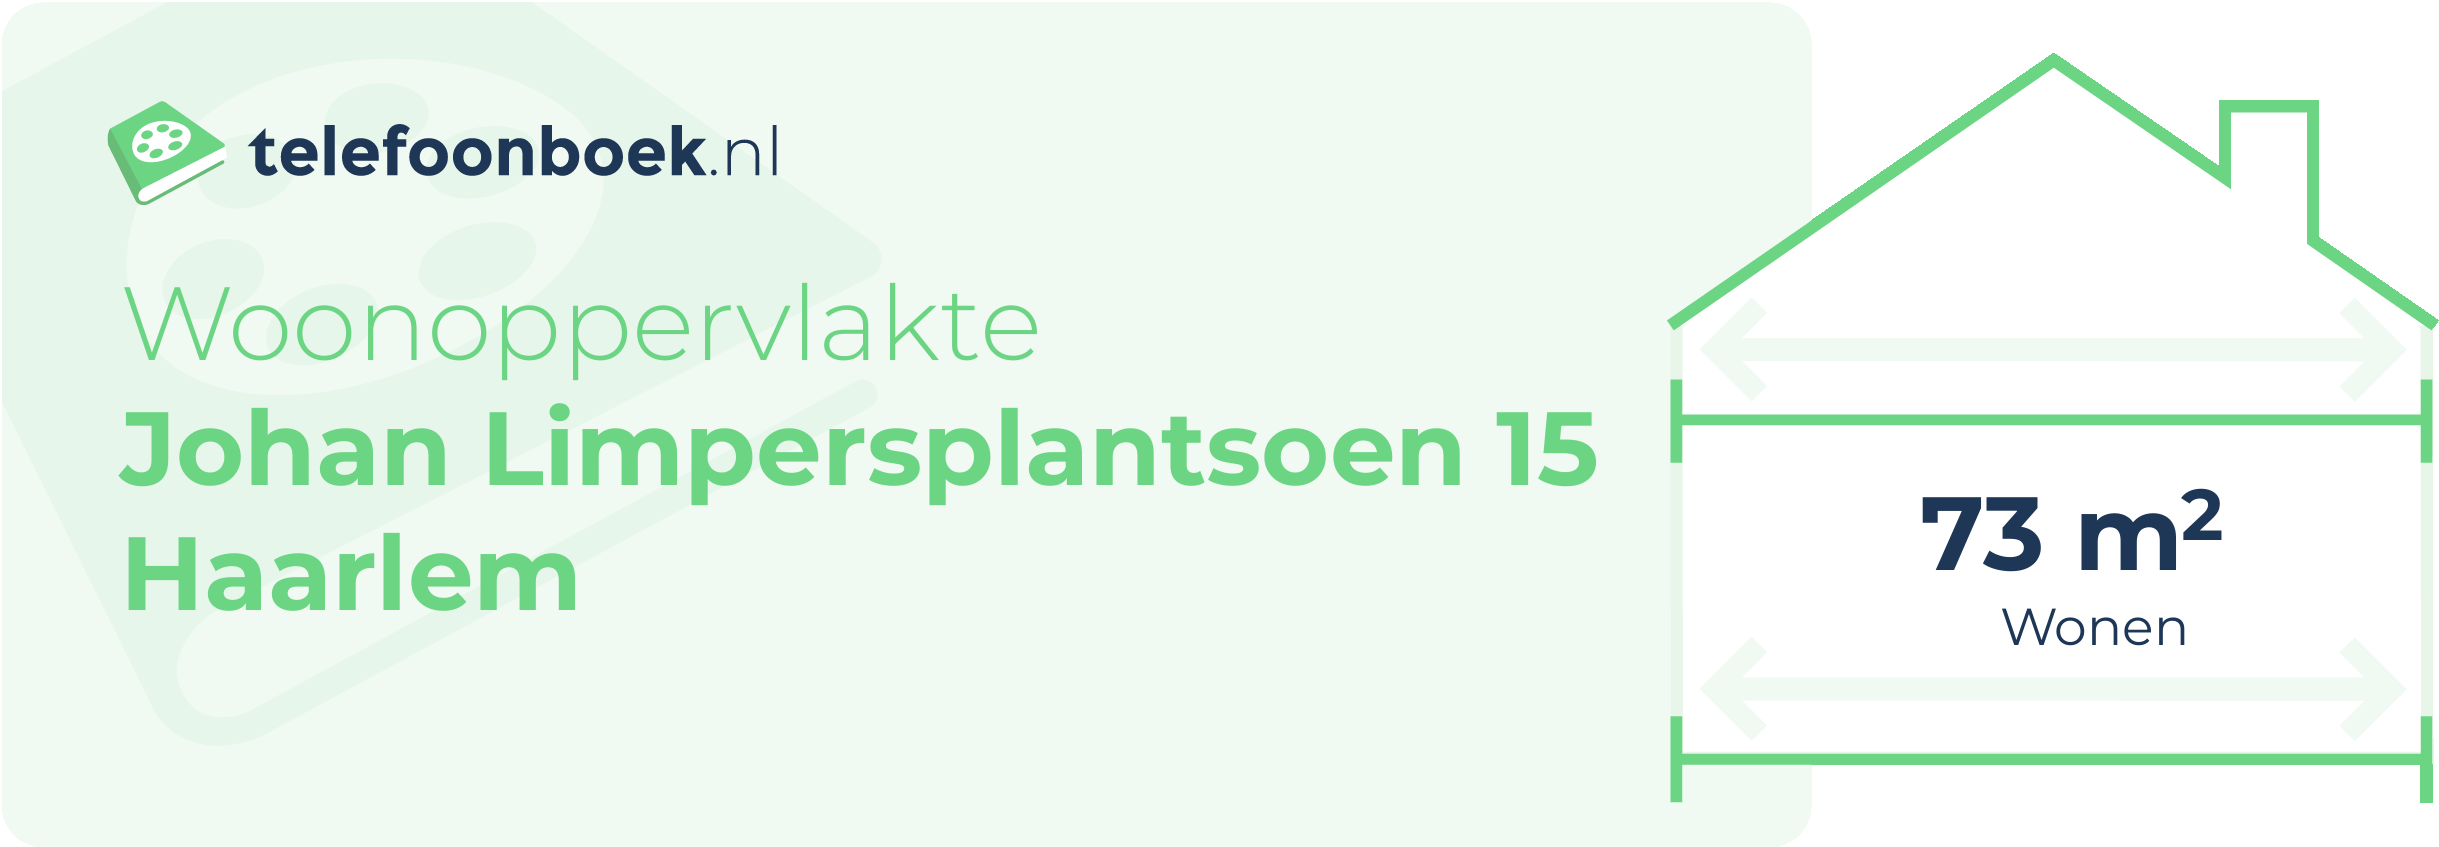 Woonoppervlakte Johan Limpersplantsoen 15 Haarlem